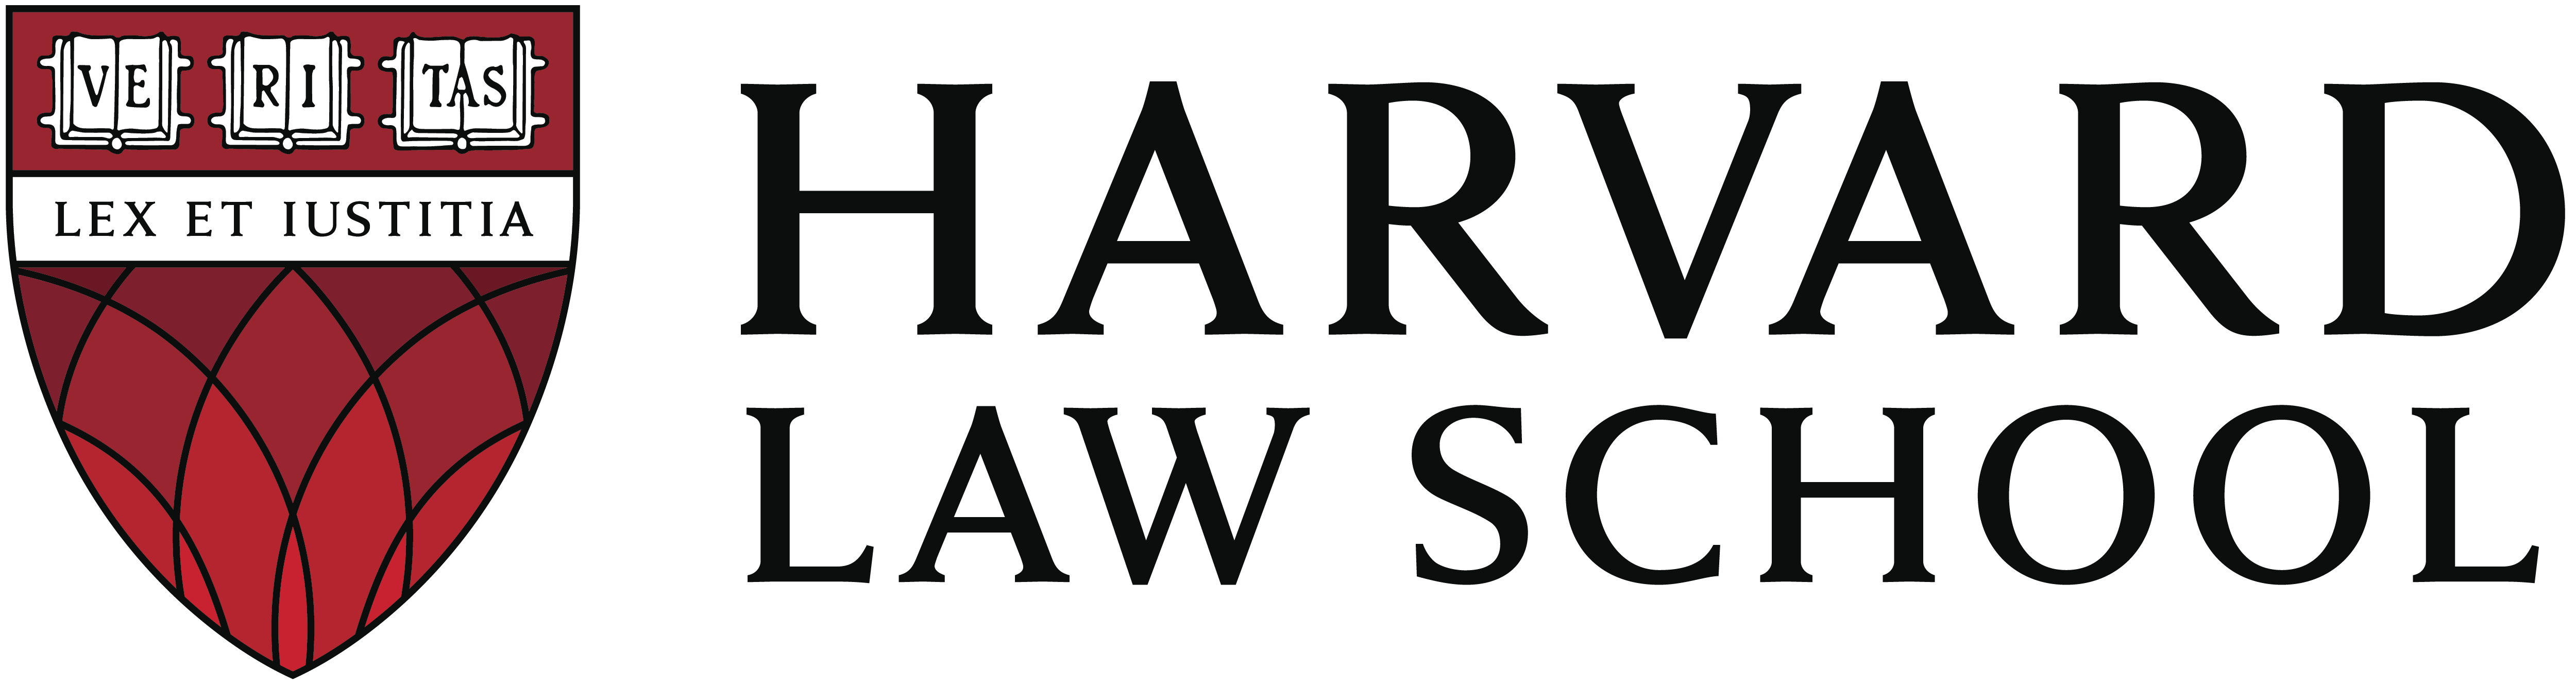 Harvard Law School Make a gift